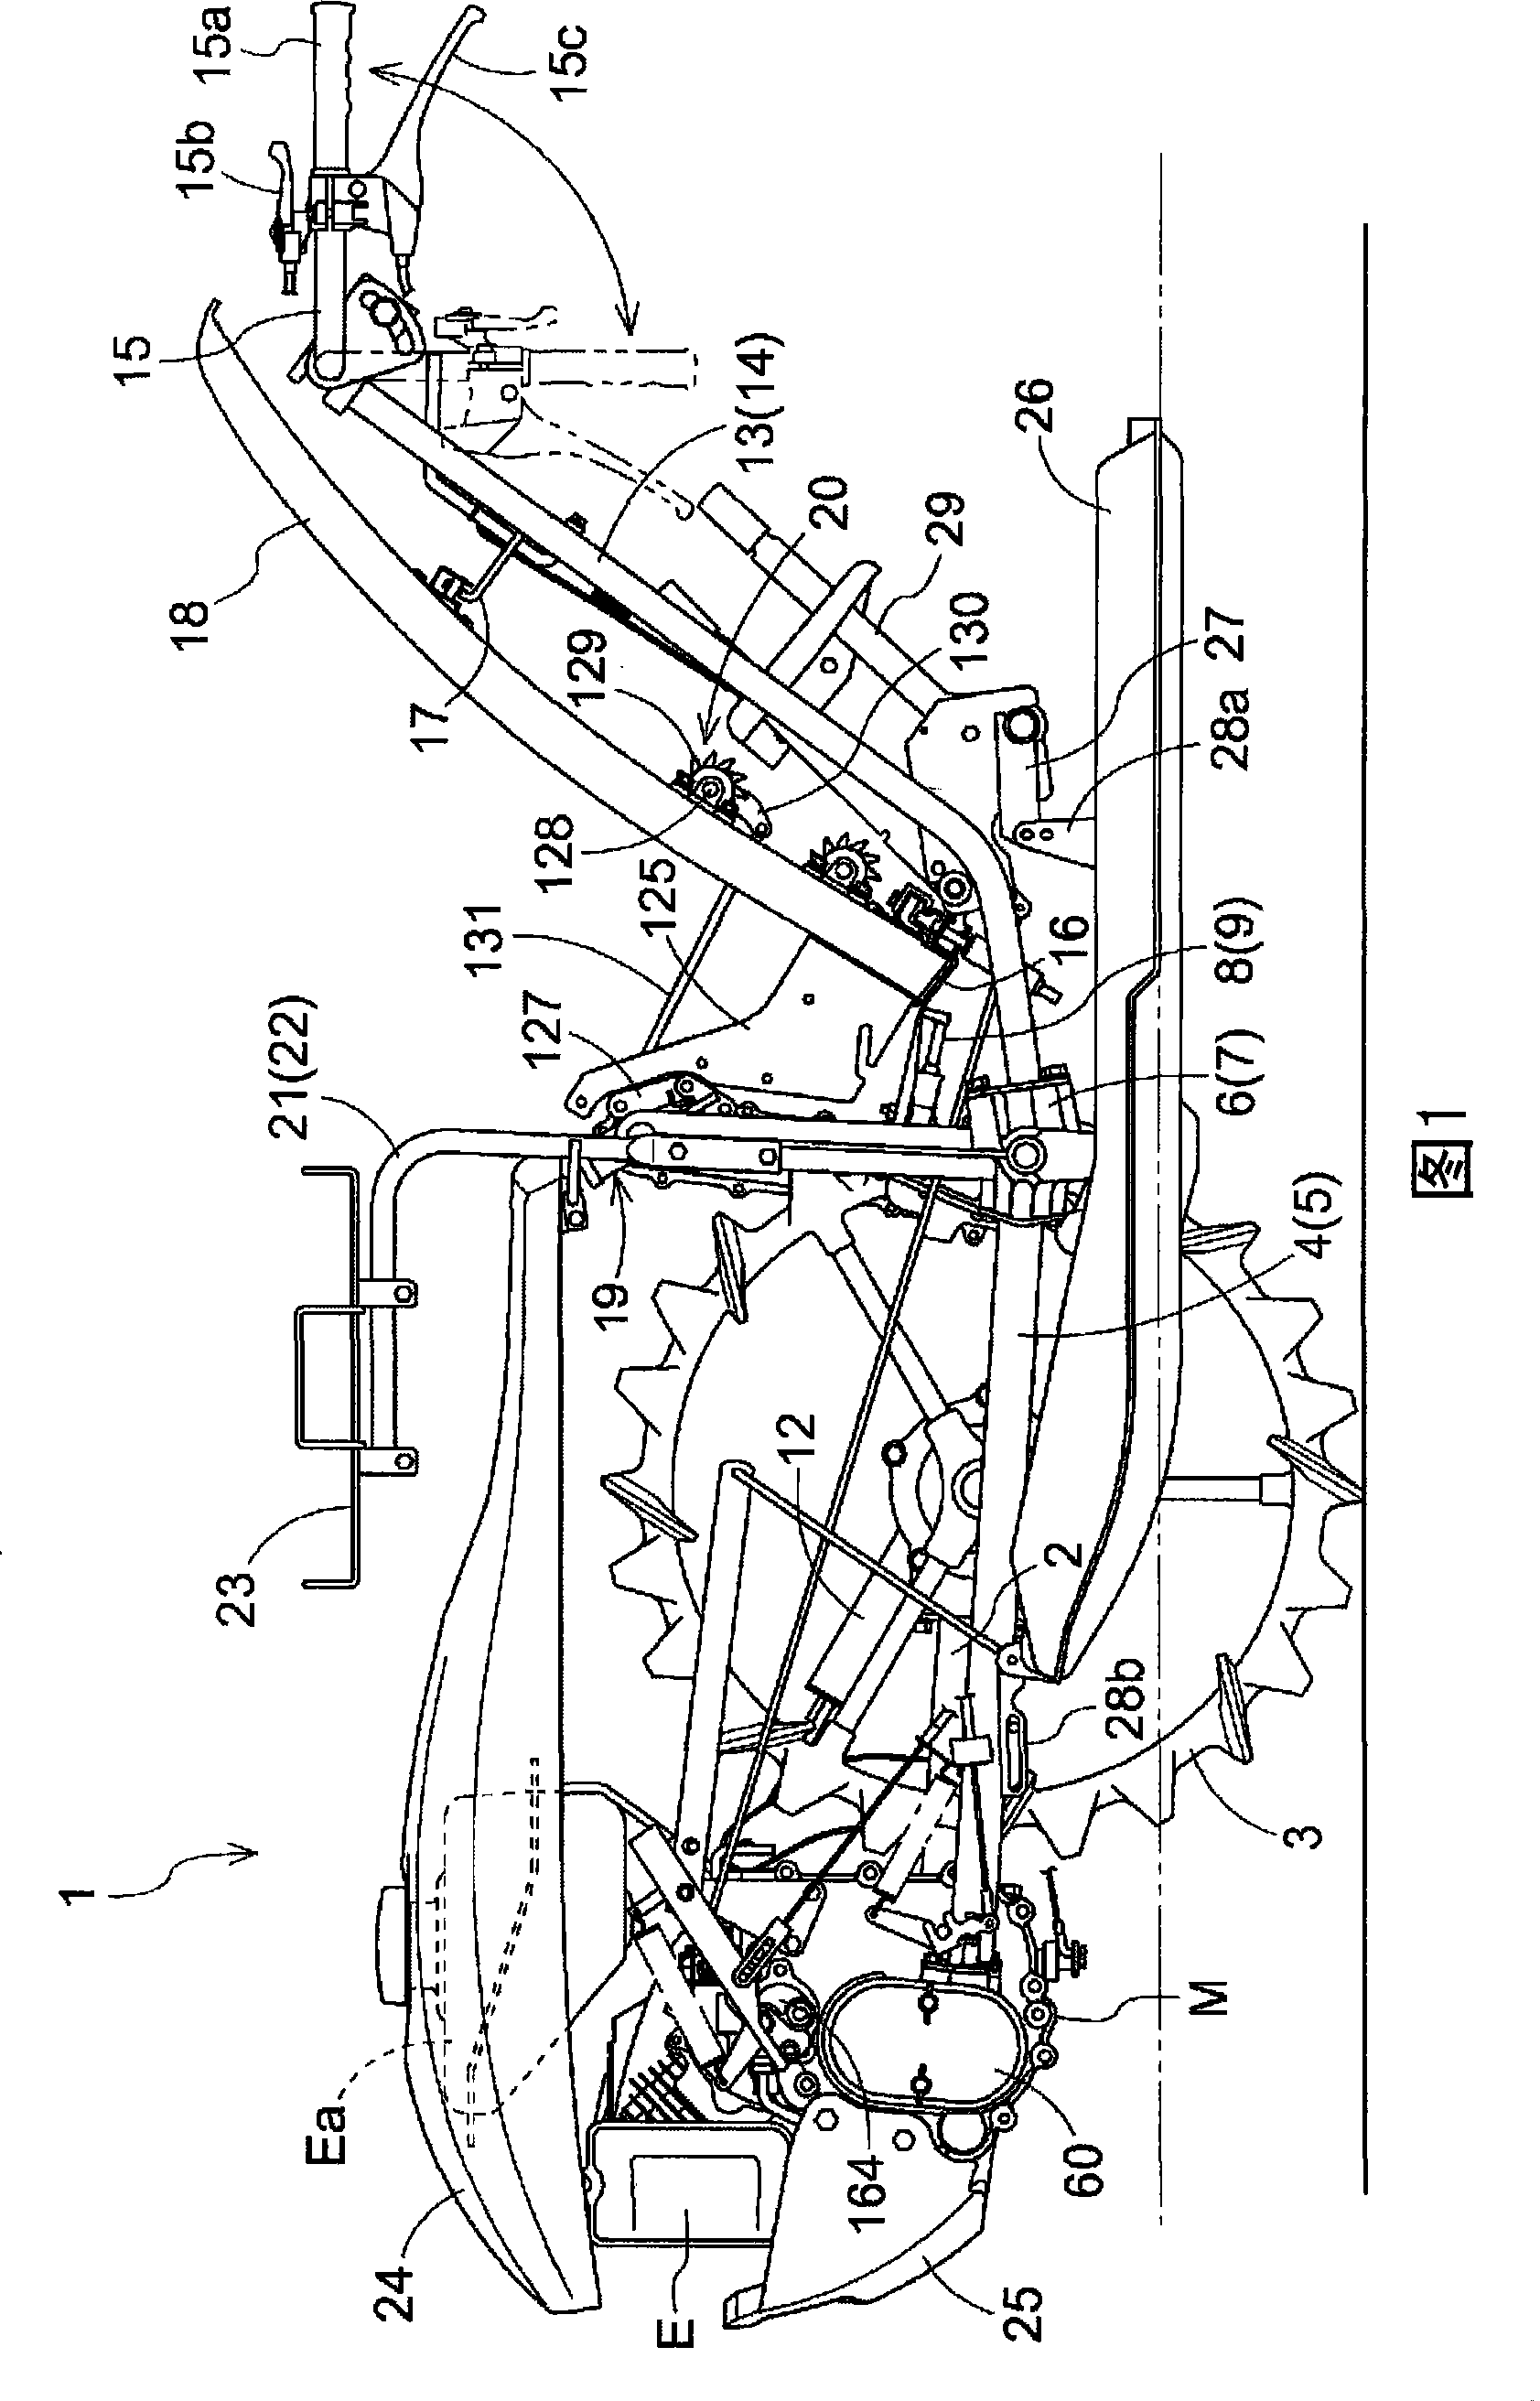 Transmission mechanism of walk-behind type paddy-field work machine